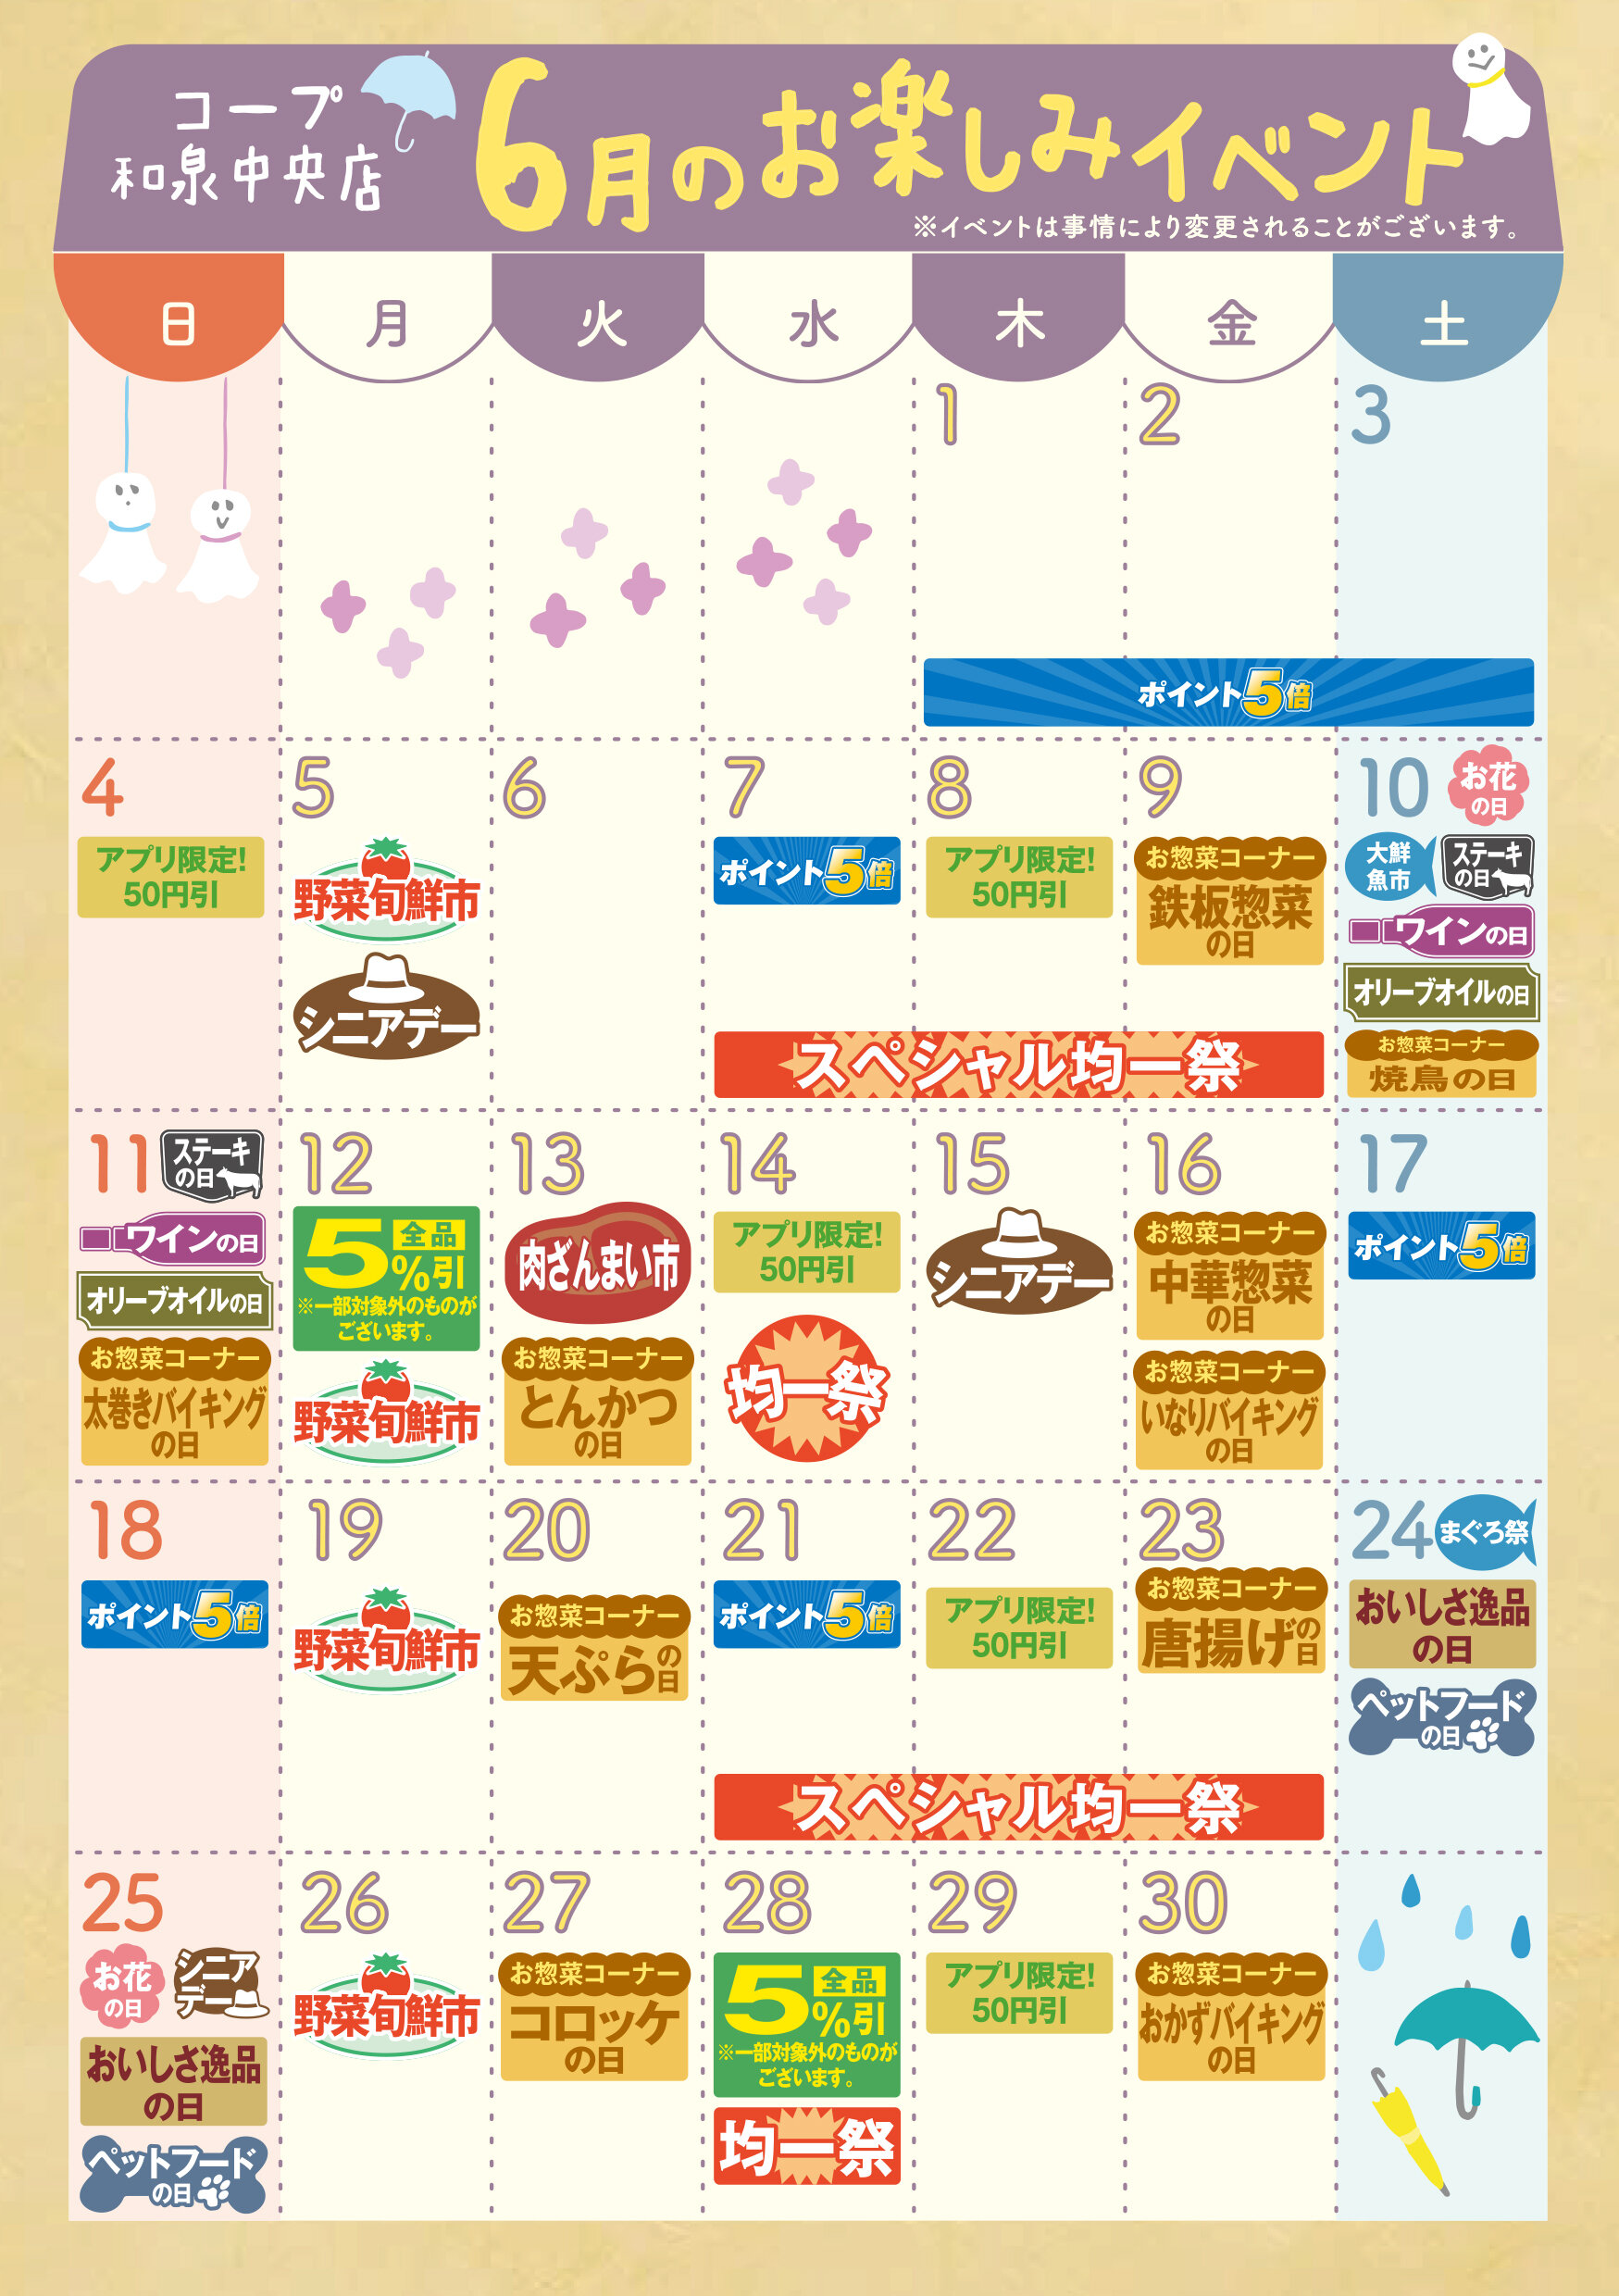 IZ2306コープのイベントカレンダー_4c_B和泉中央.jpg